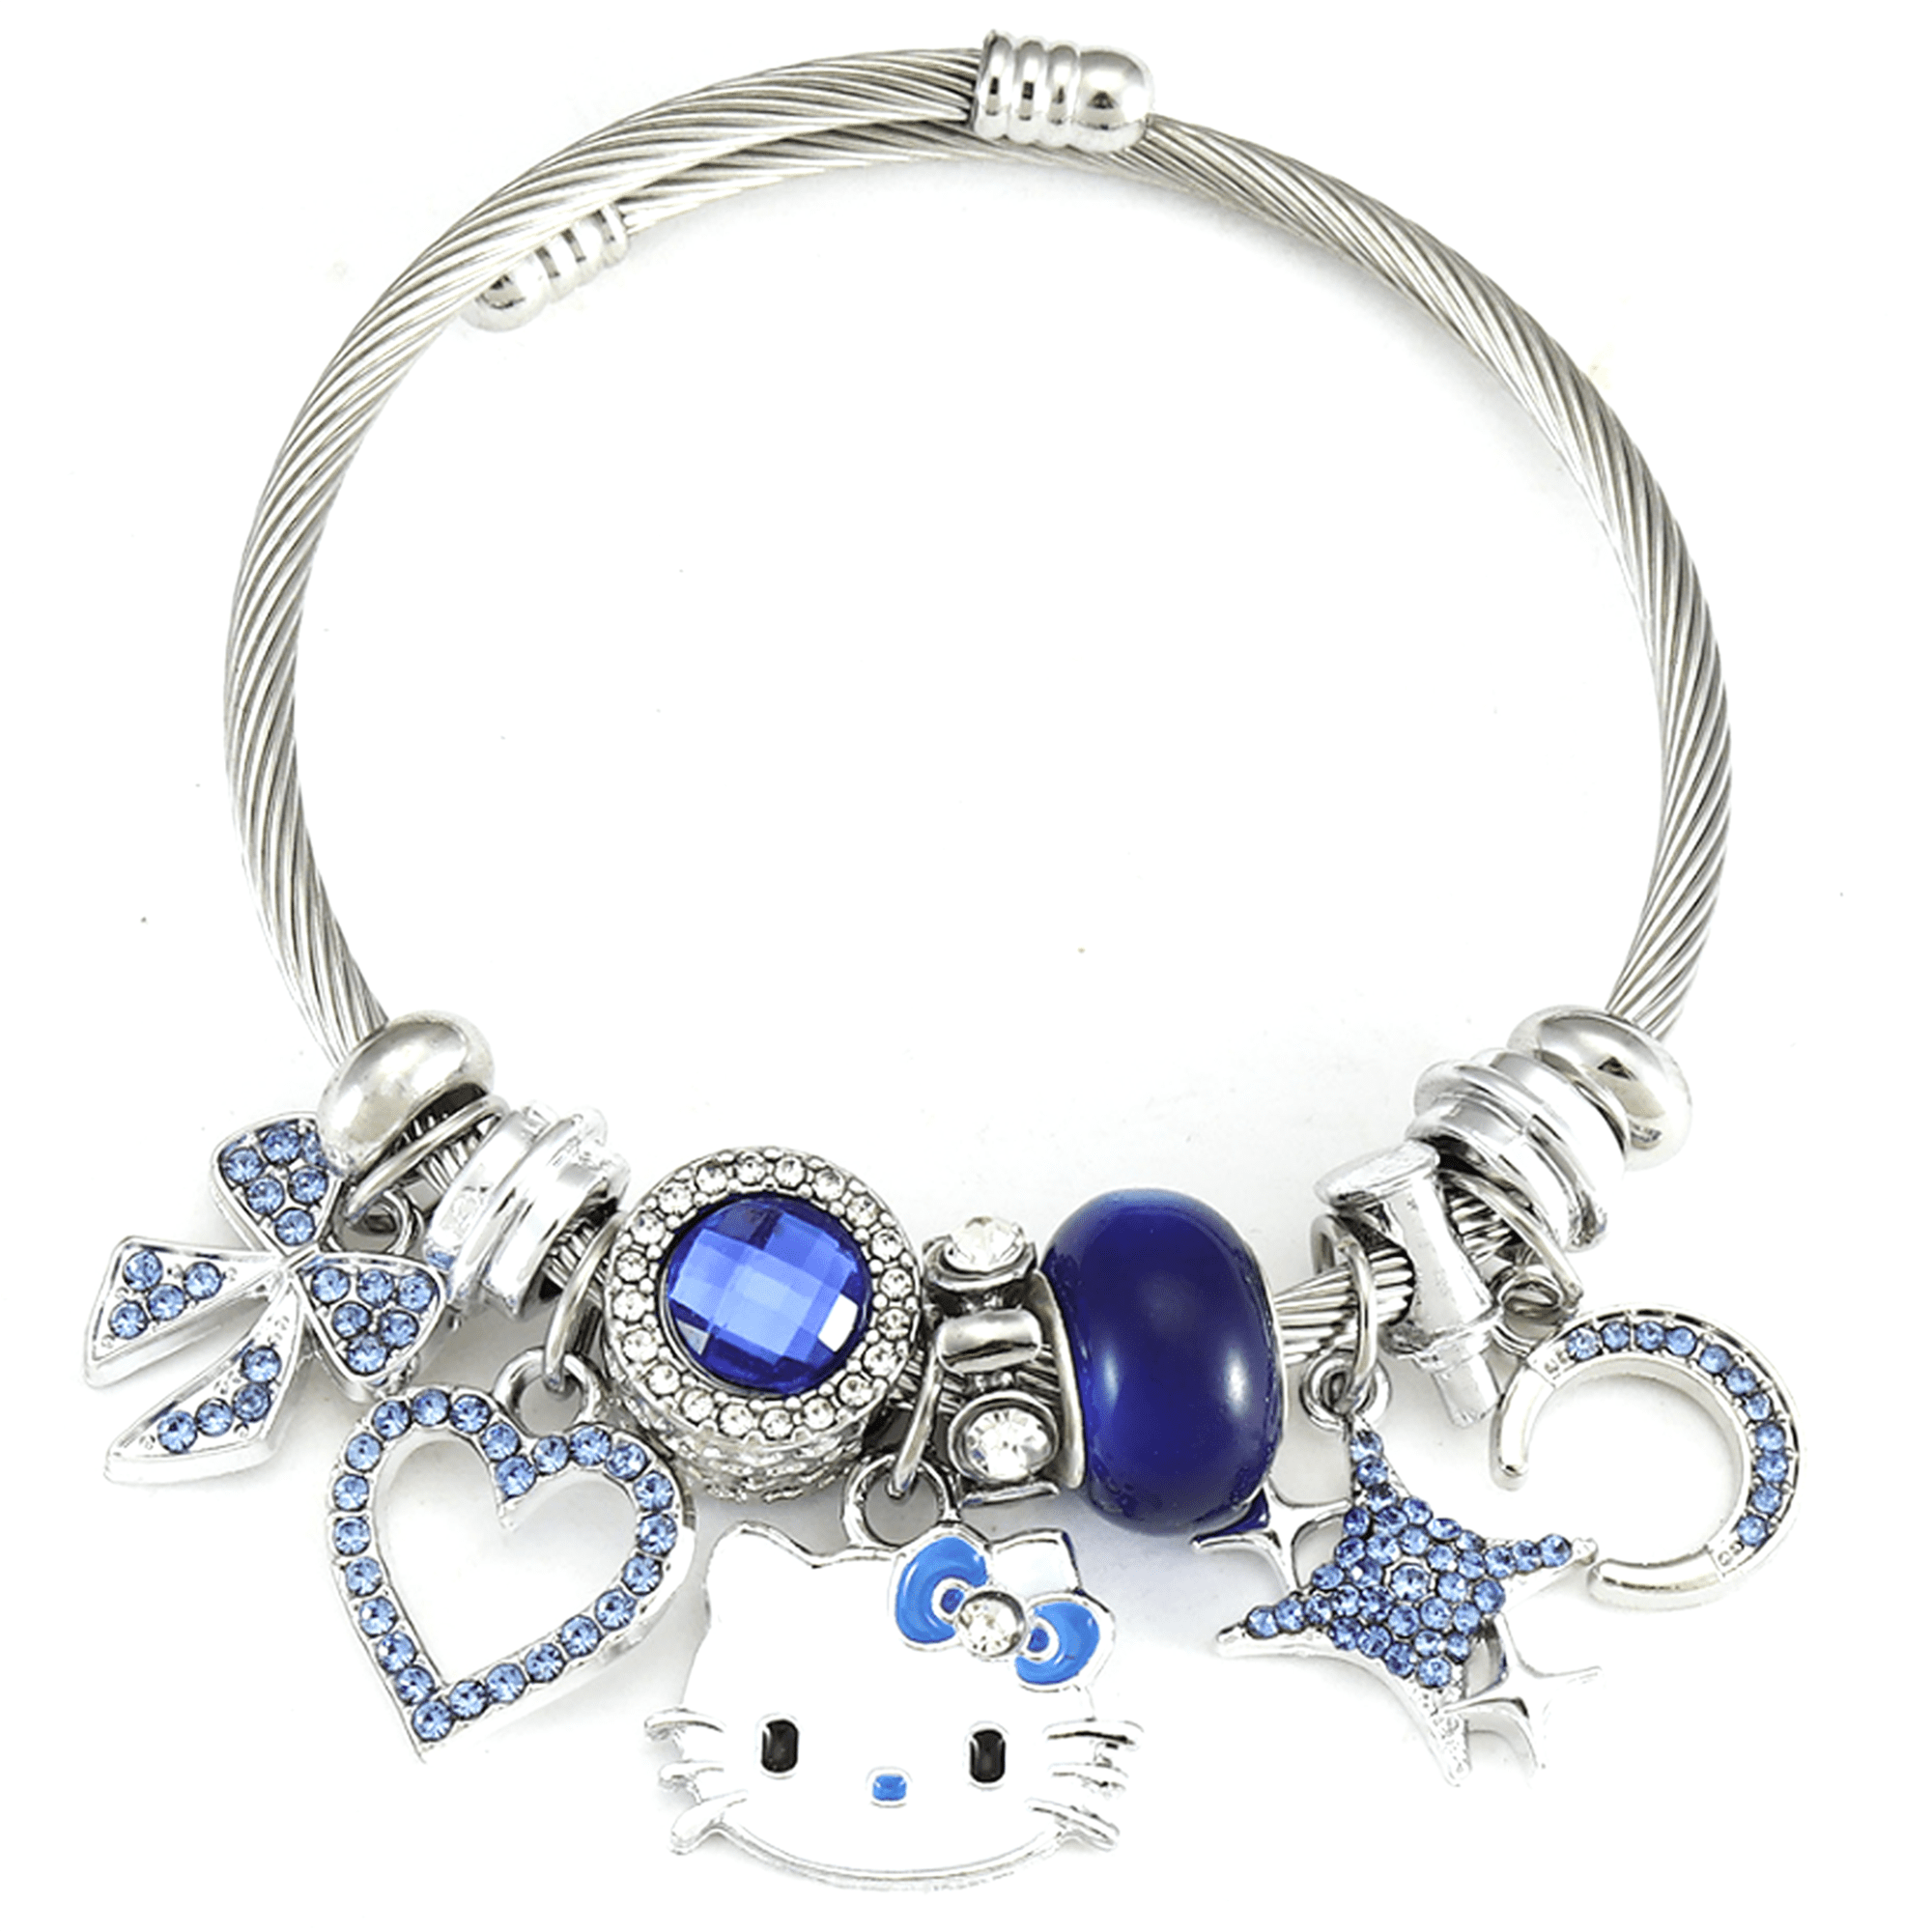 TGECTP Hello Inspired Kawaii Kitty Bangle Bracelet, Cute Charms Bracelet,  Adjustable Stainless Steel Cuff Bracelet Birthday Gift for Women Girls